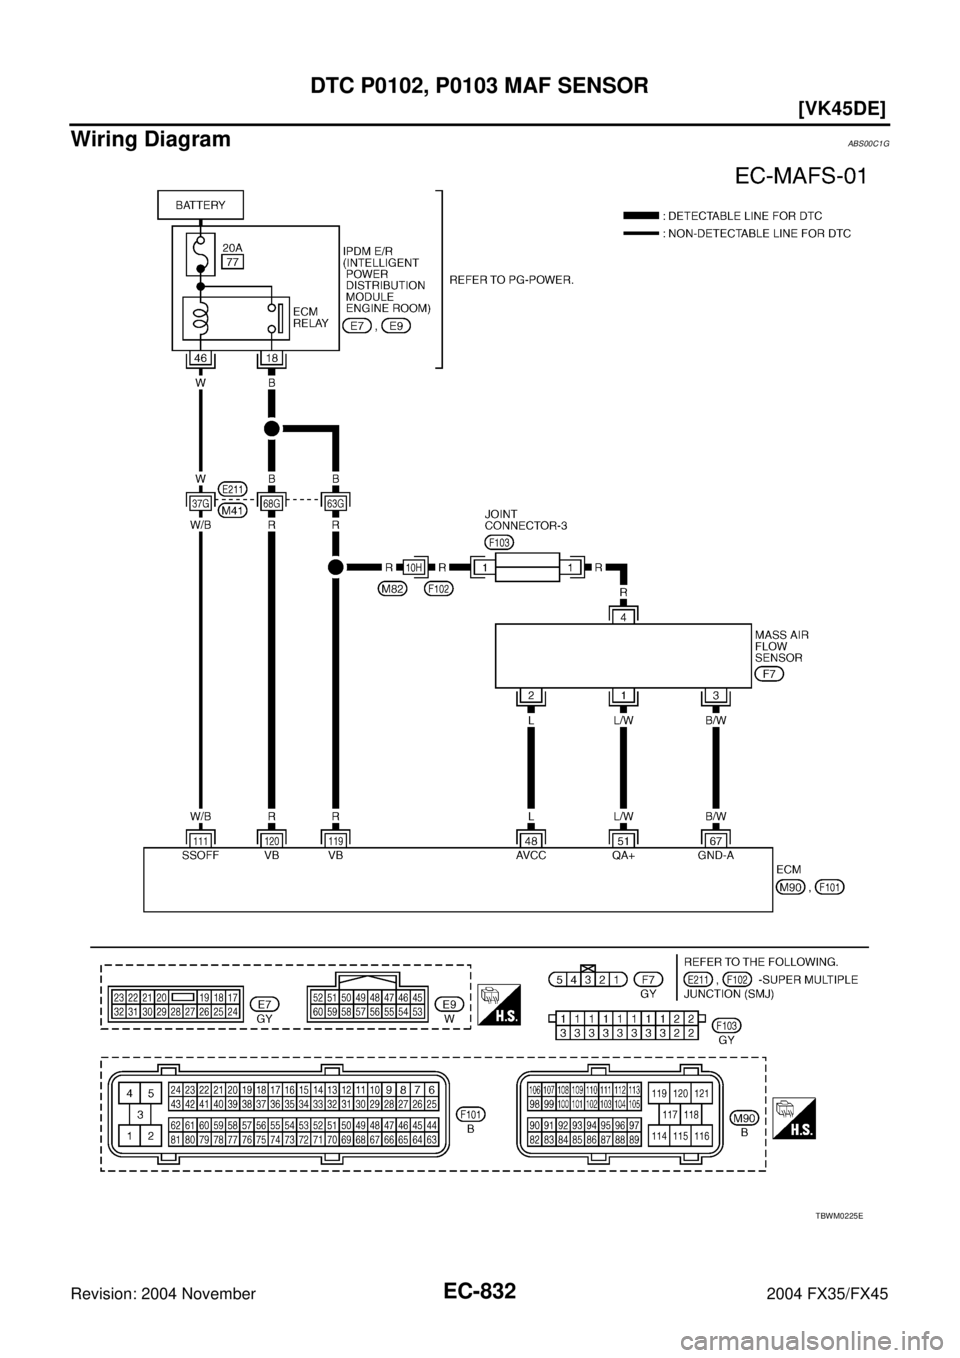 INFINITI FX35 2004  Service Manual EC-832
[VK45DE]
DTC P0102, P0103 MAF SENSOR
Revision: 2004 November 2004 FX35/FX45
Wiring DiagramABS00C1G
TBWM0225E 